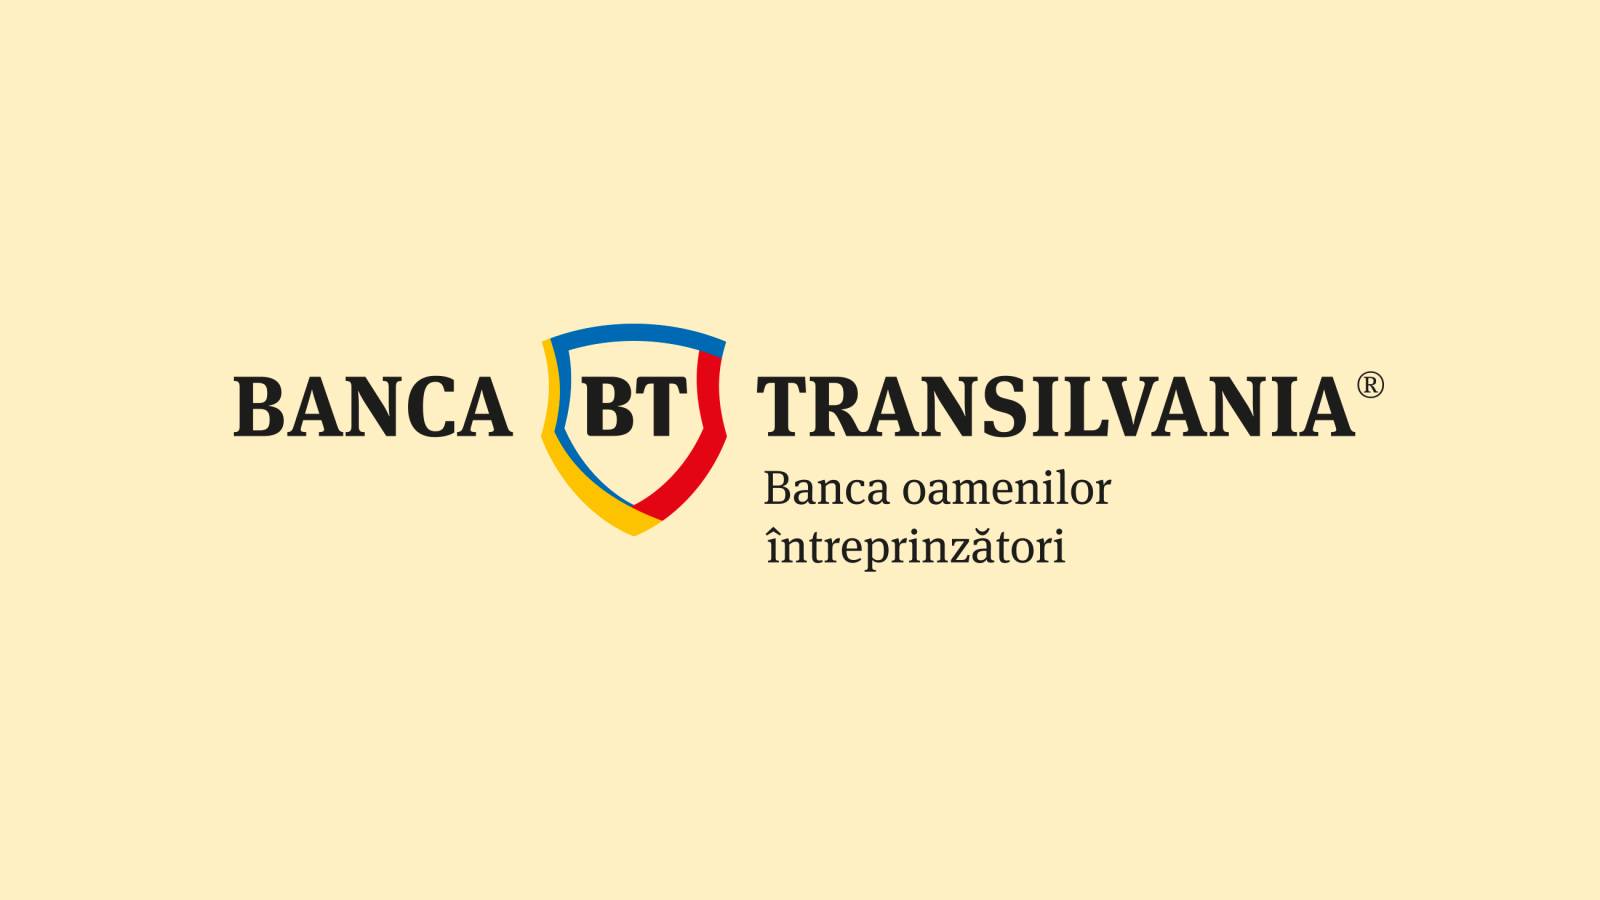 BANCA Transilvania ULTIM MOMENT Anuntul Schimbari IMPORTANTE Clientii Romani